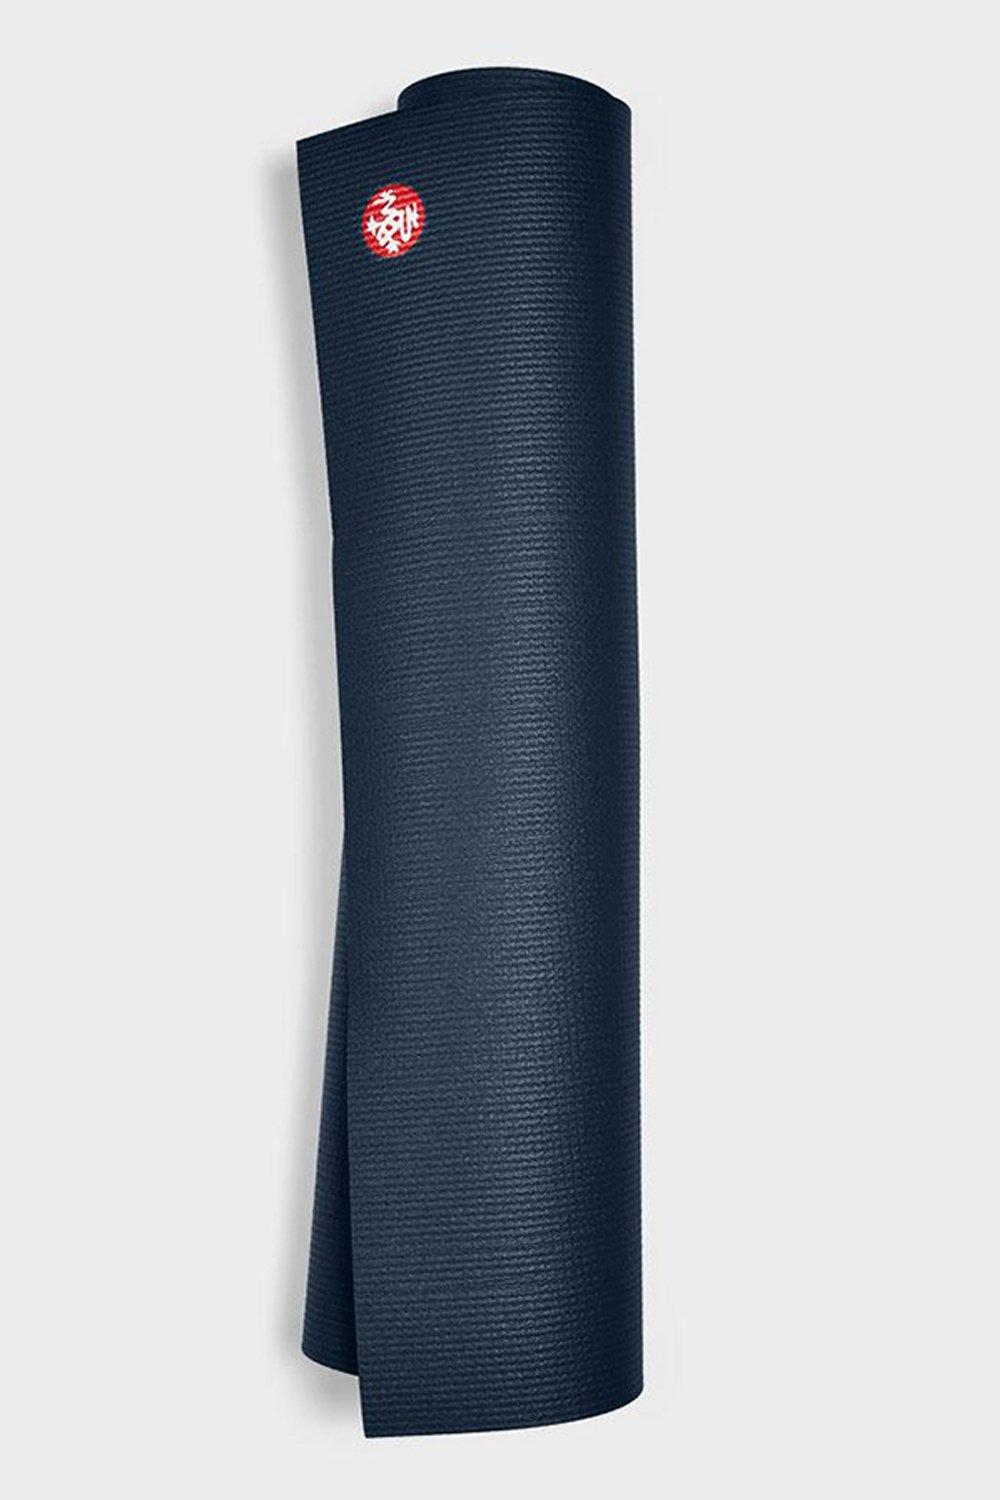 PRO Standard 71 Inch Yoga Mat 6mm